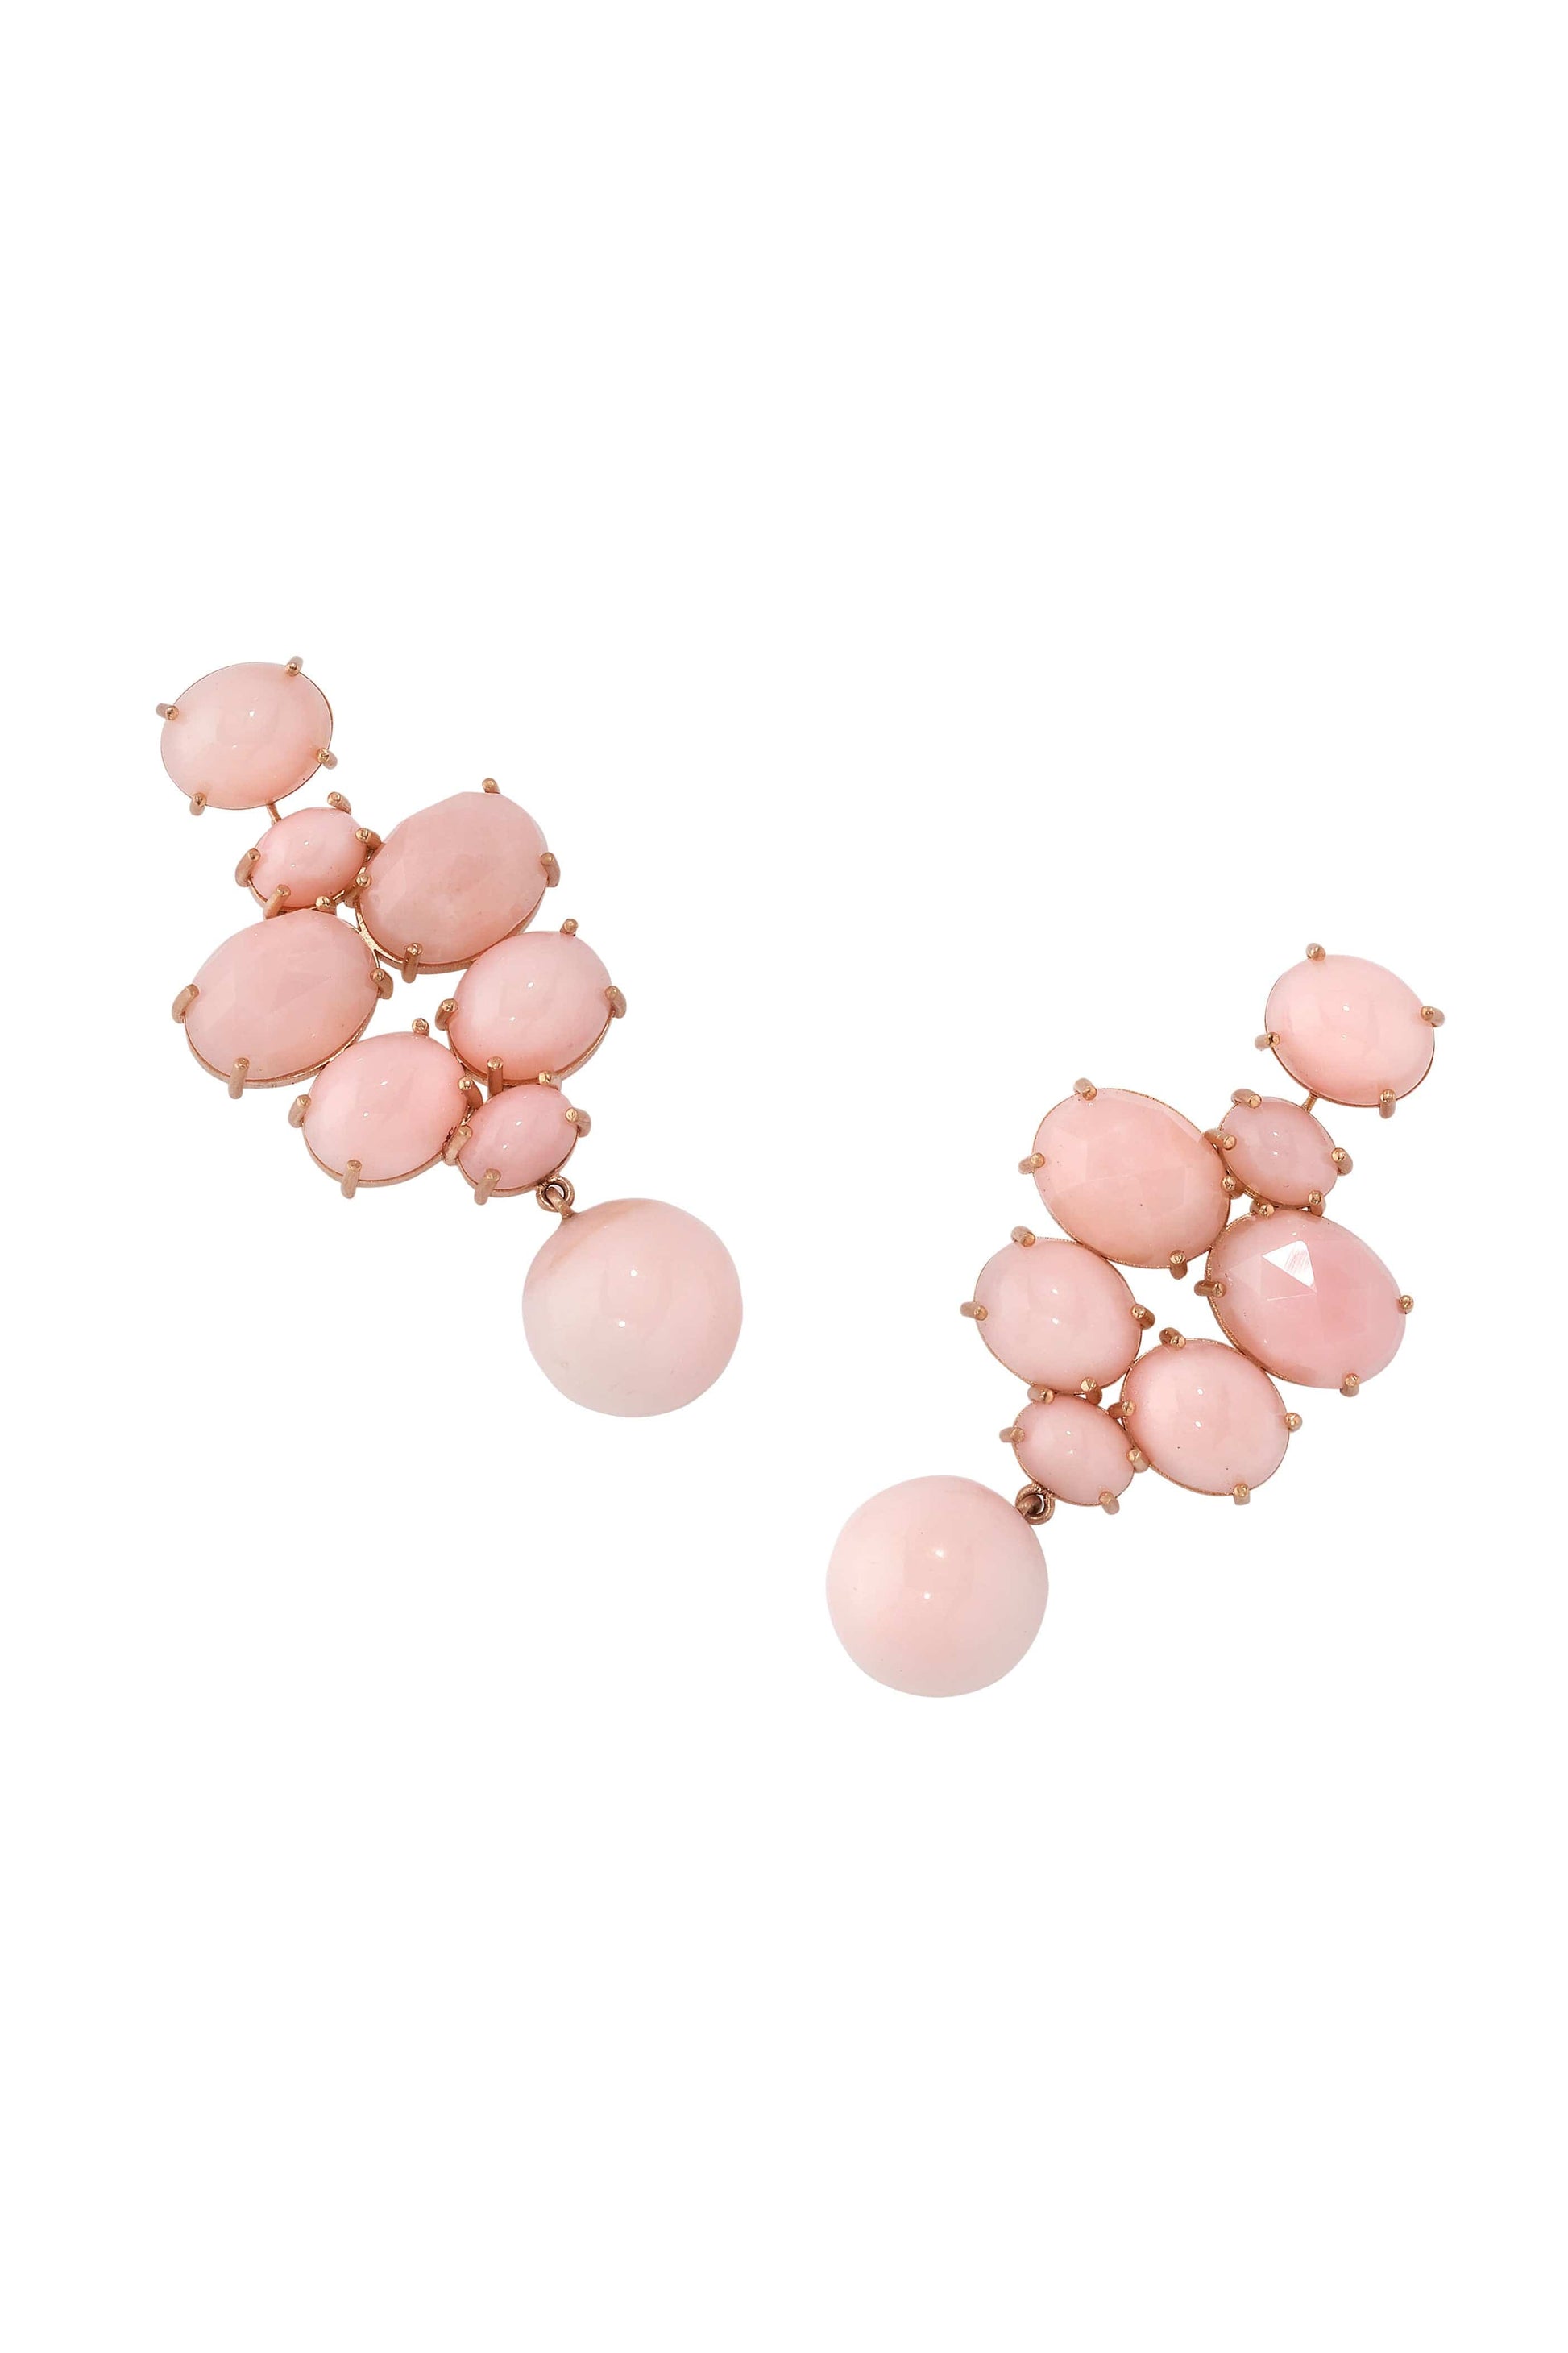 IRENE NEUWIRTH JEWELRY-Pink Opal Gumball Drop Earrings-ROSE GOLD